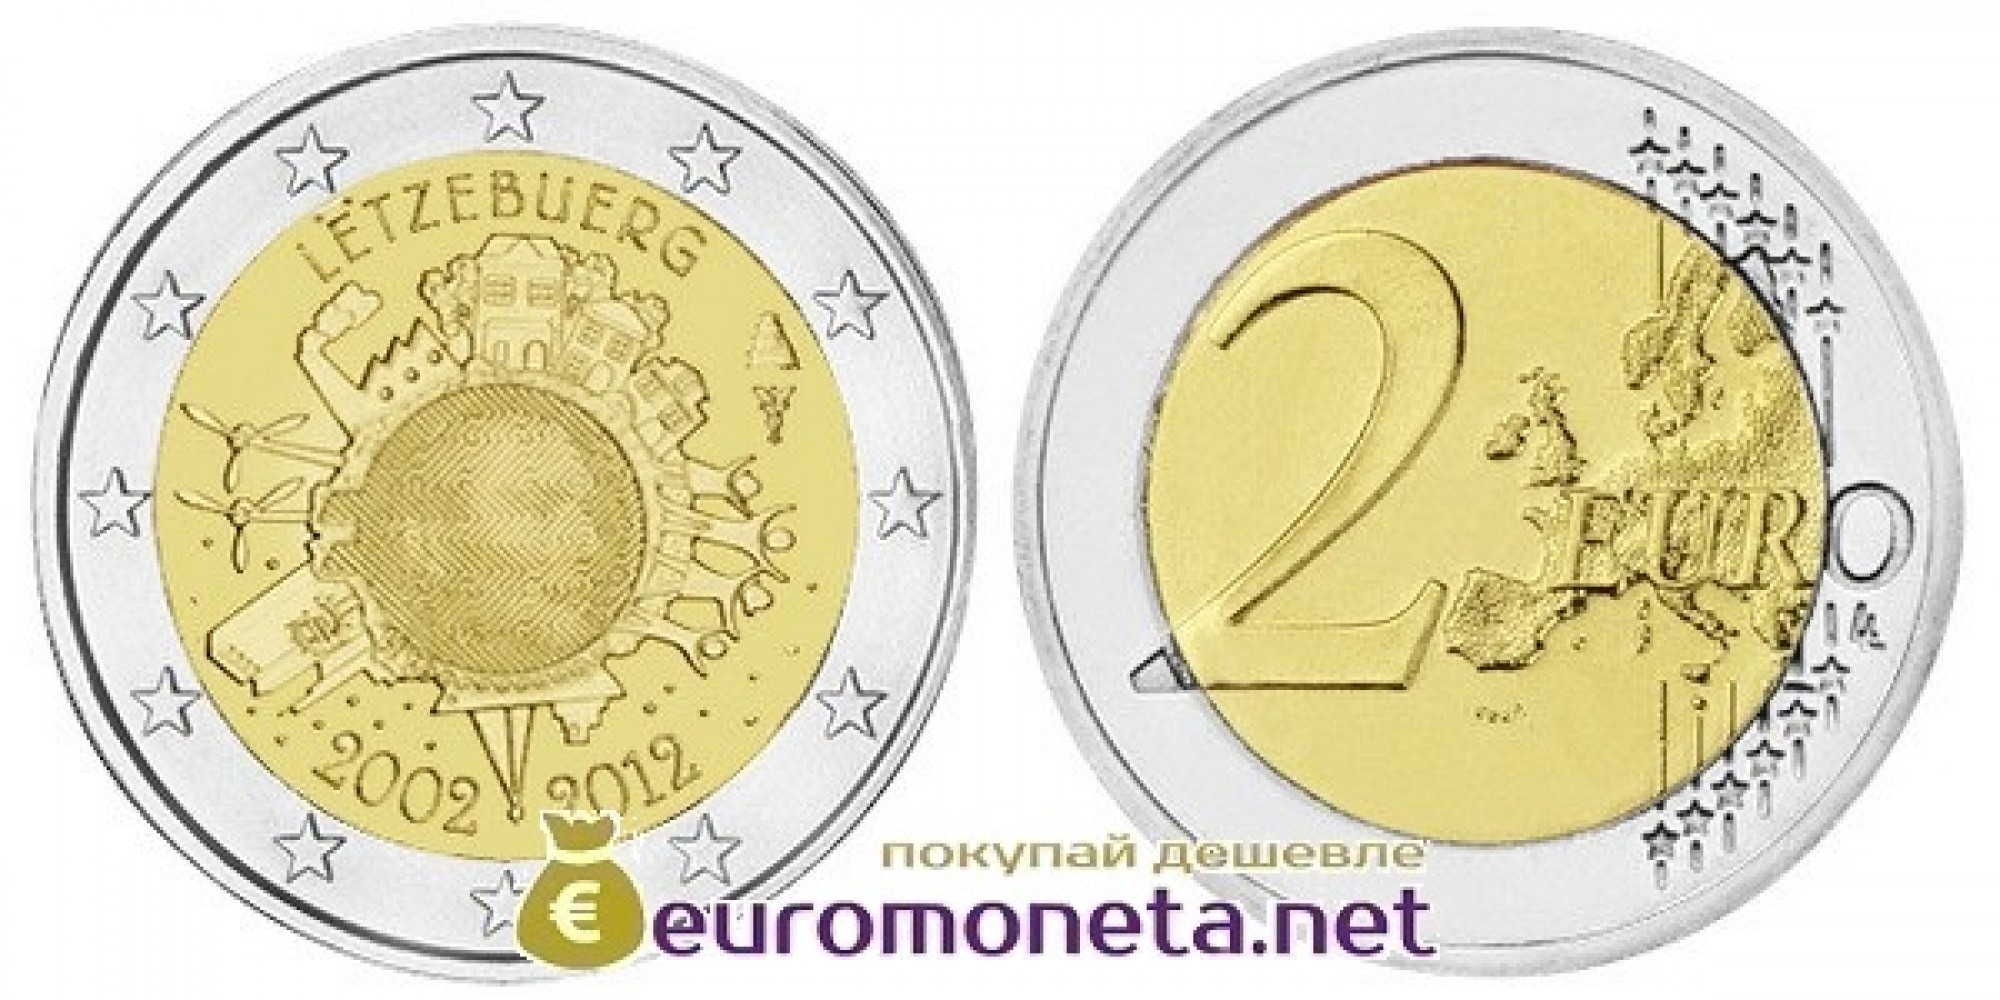 Люксембург 2 евро 2012 год 10 лет наличному обращению евро, биметалл АЦ из ролла